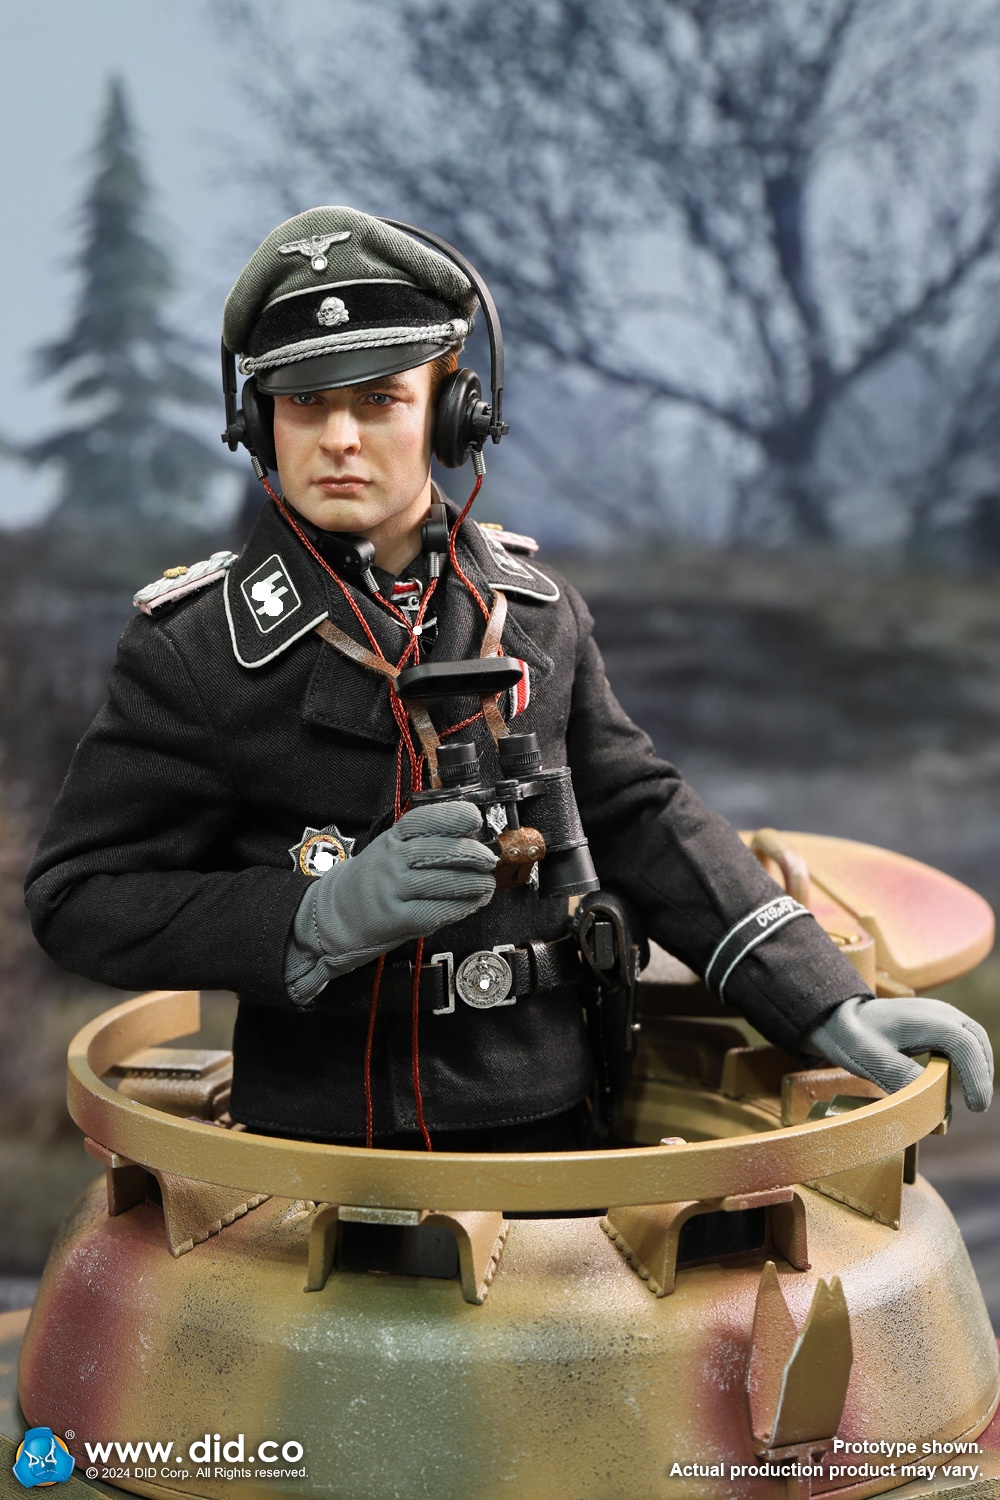 Max Wünsche - WWII German Panzer Commander